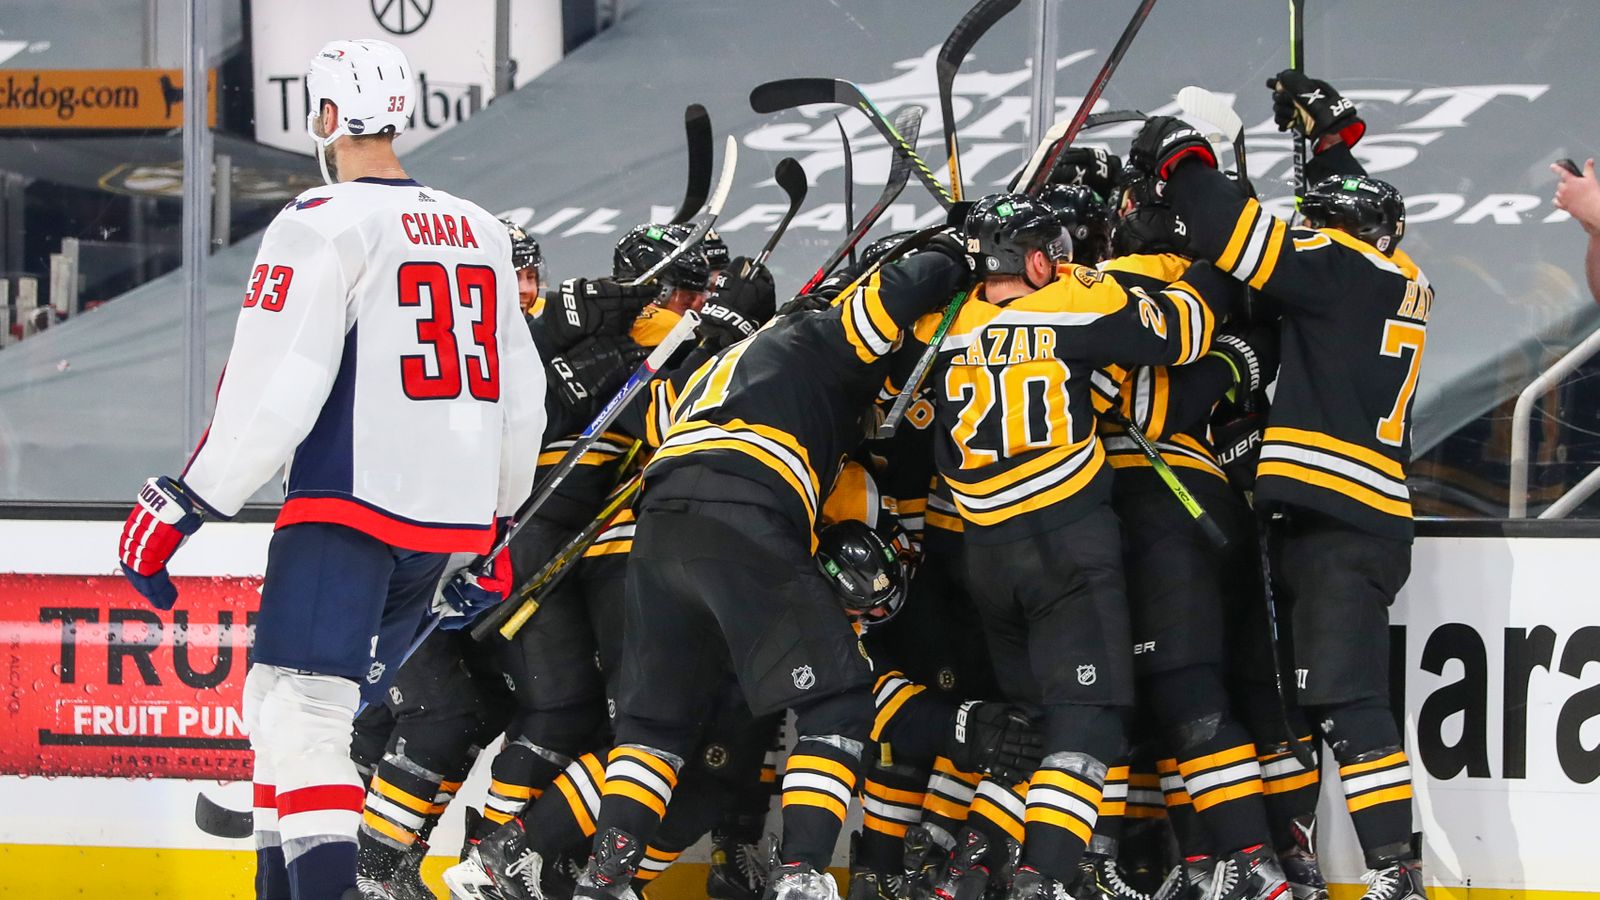 Bruins Postgame: B's Fall 3-2